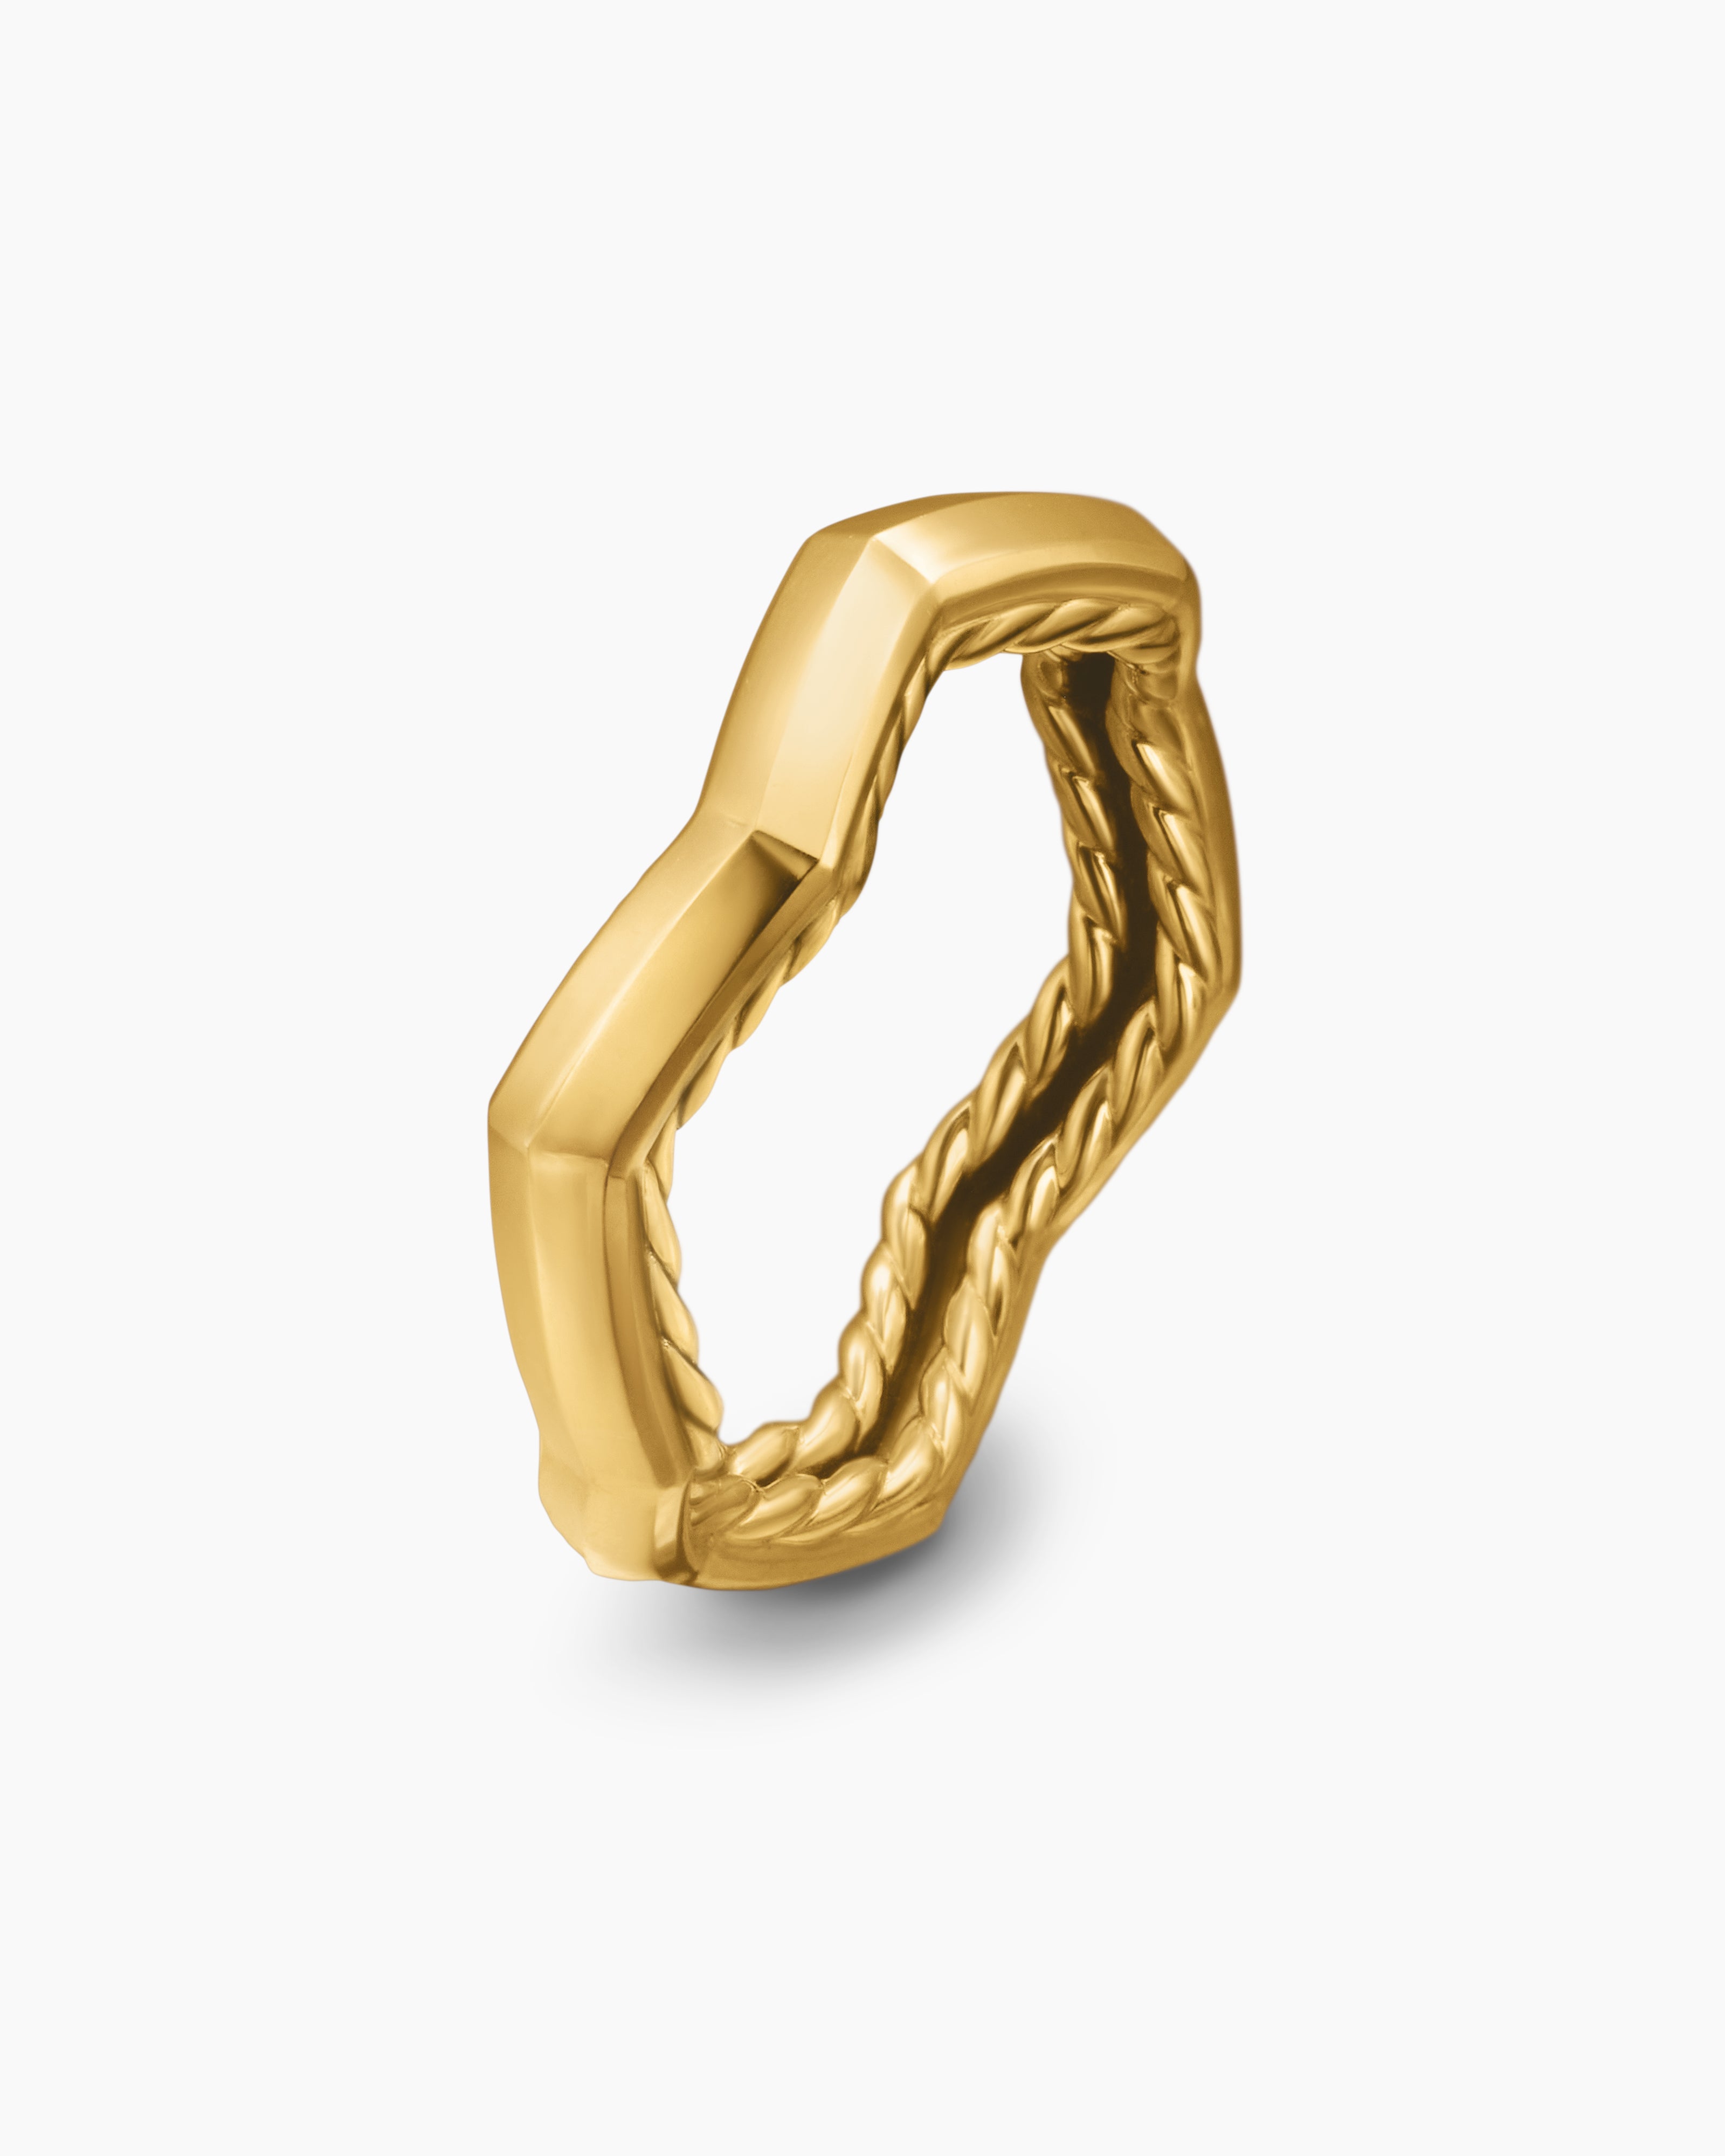 Zig Zag Stax™ Ring in 18K Yellow Gold, 3mm